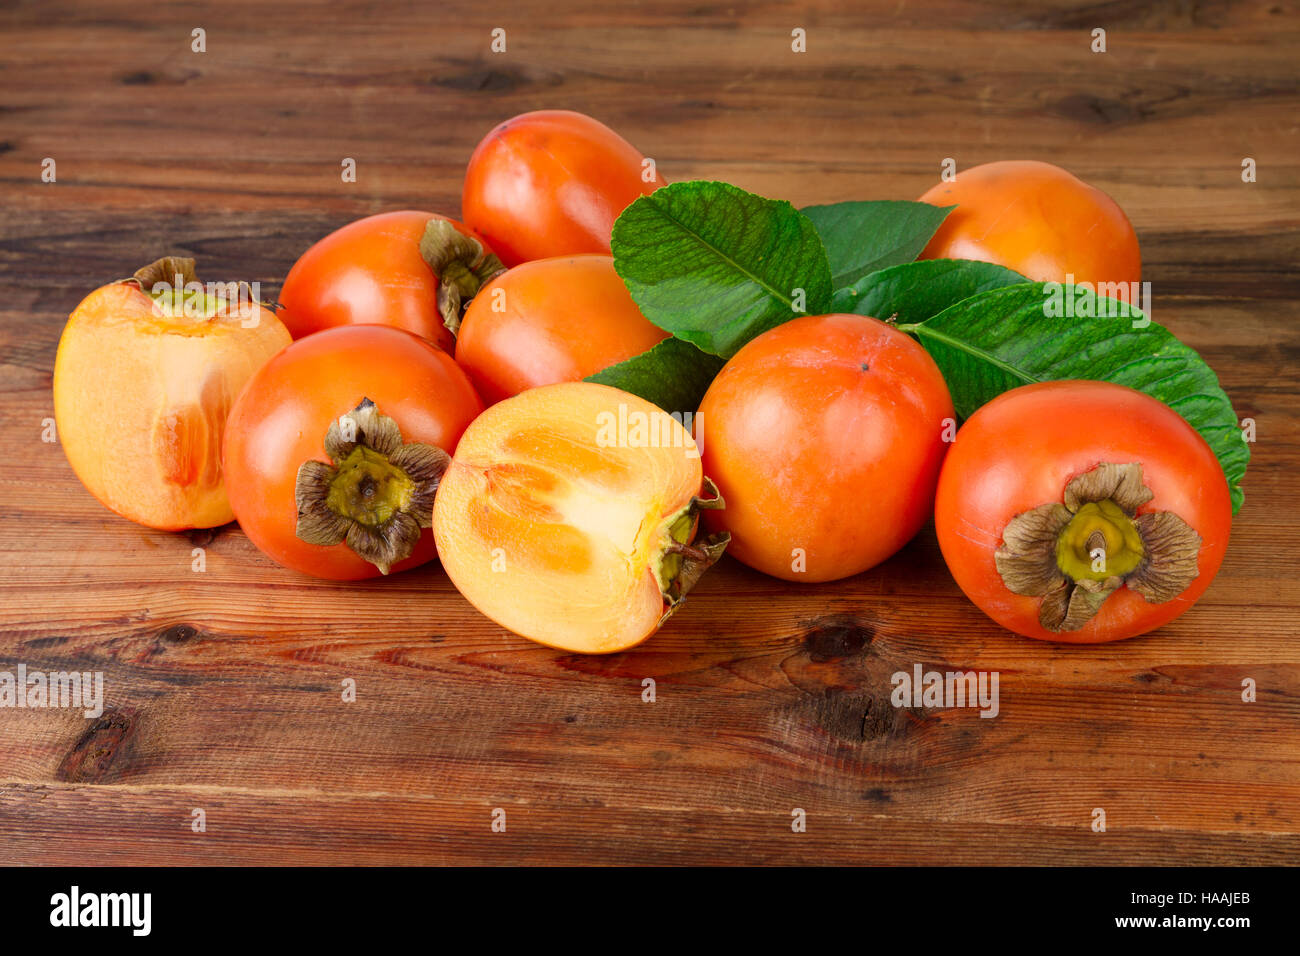 Persimmon. Kaki fruits on old wooden background. Stock Photo